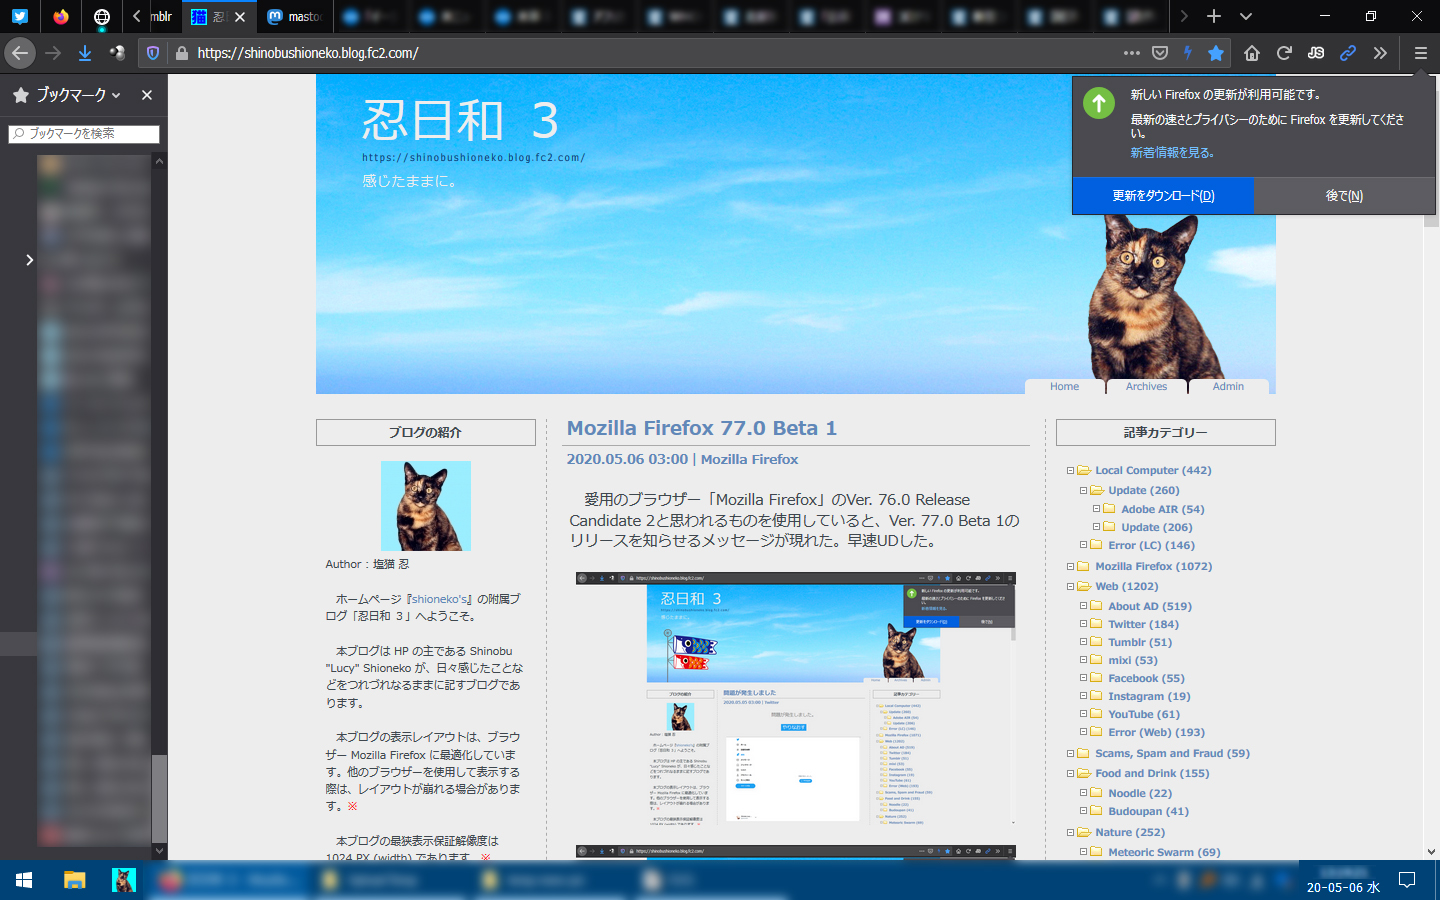 Mozilla Firefox 77.0 Beta 2